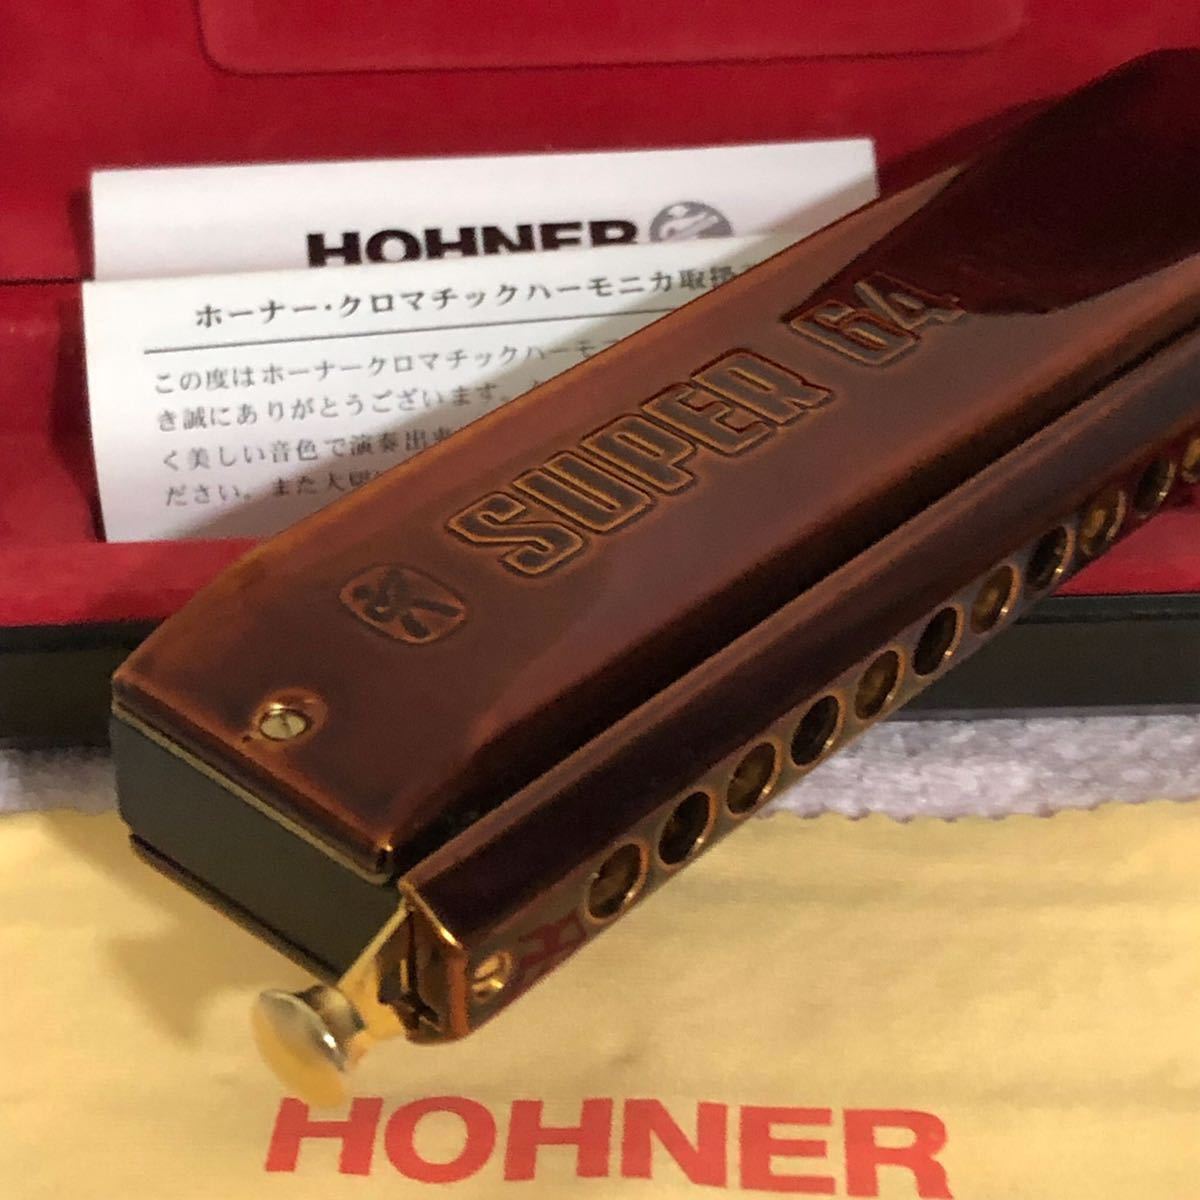 HOHNER SUPER 64 chromonica gold 漆塗り仕様 徳永氏検品A級美品